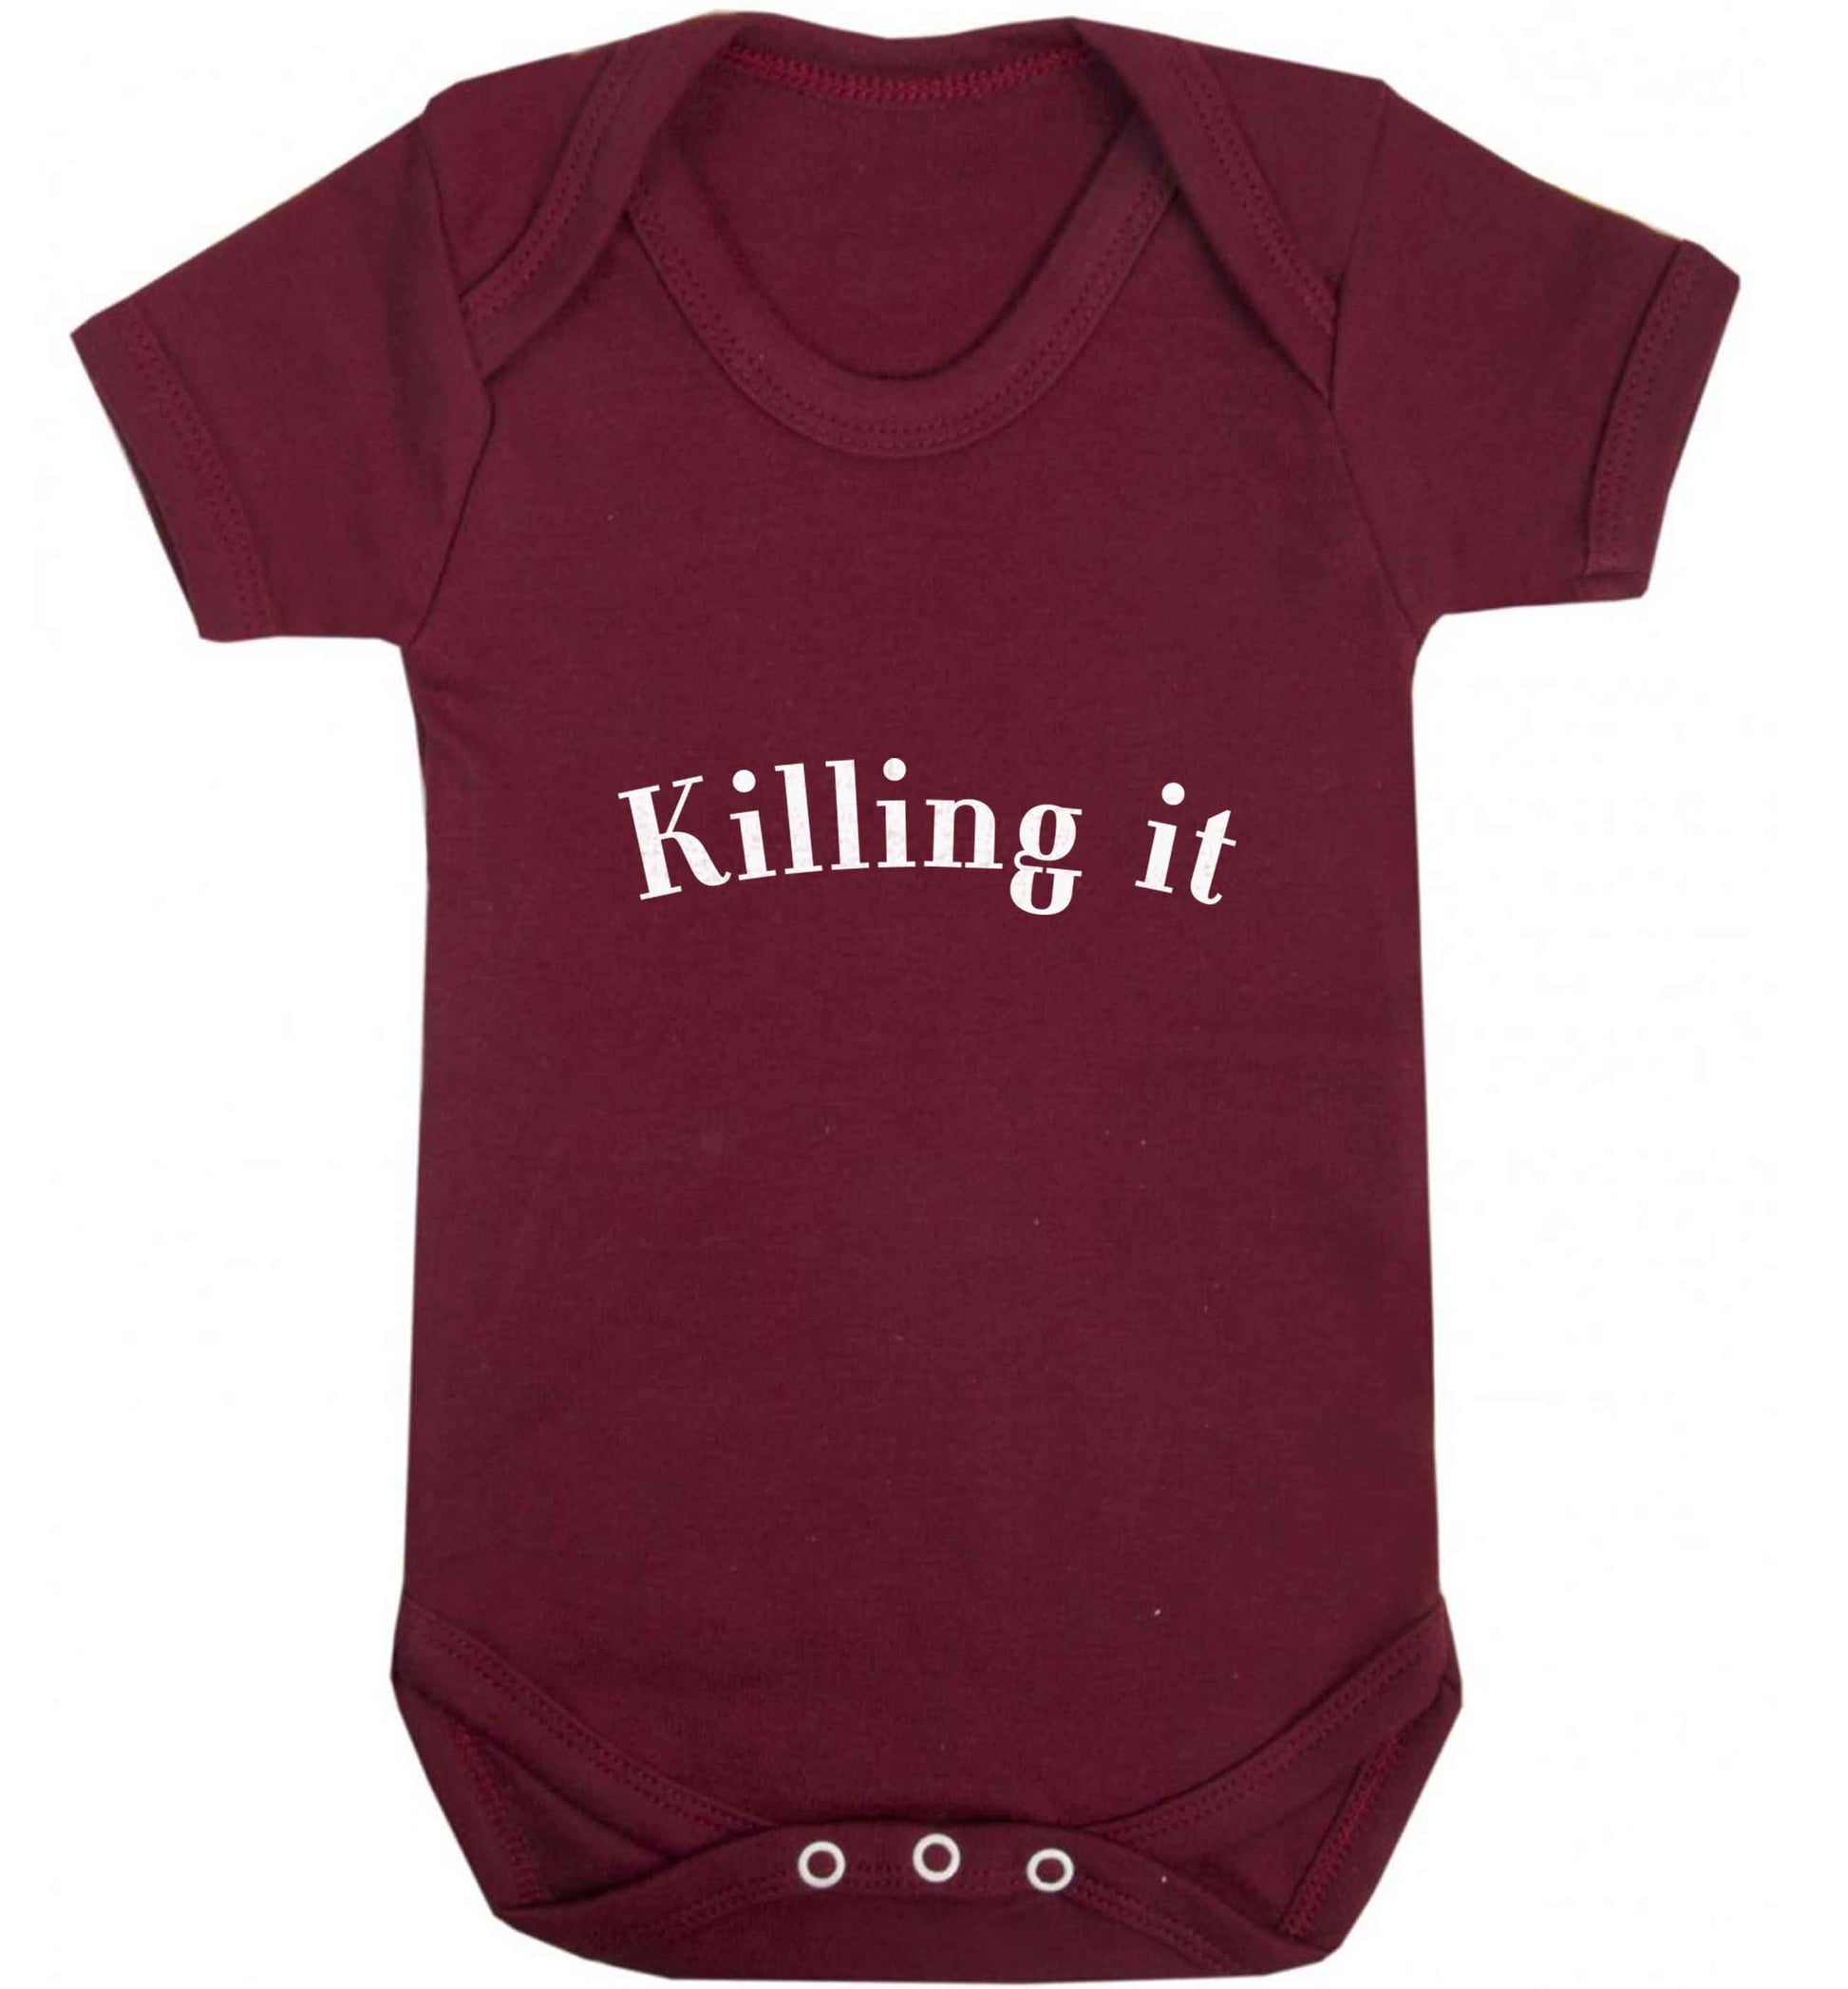 Killing it baby vest maroon 18-24 months